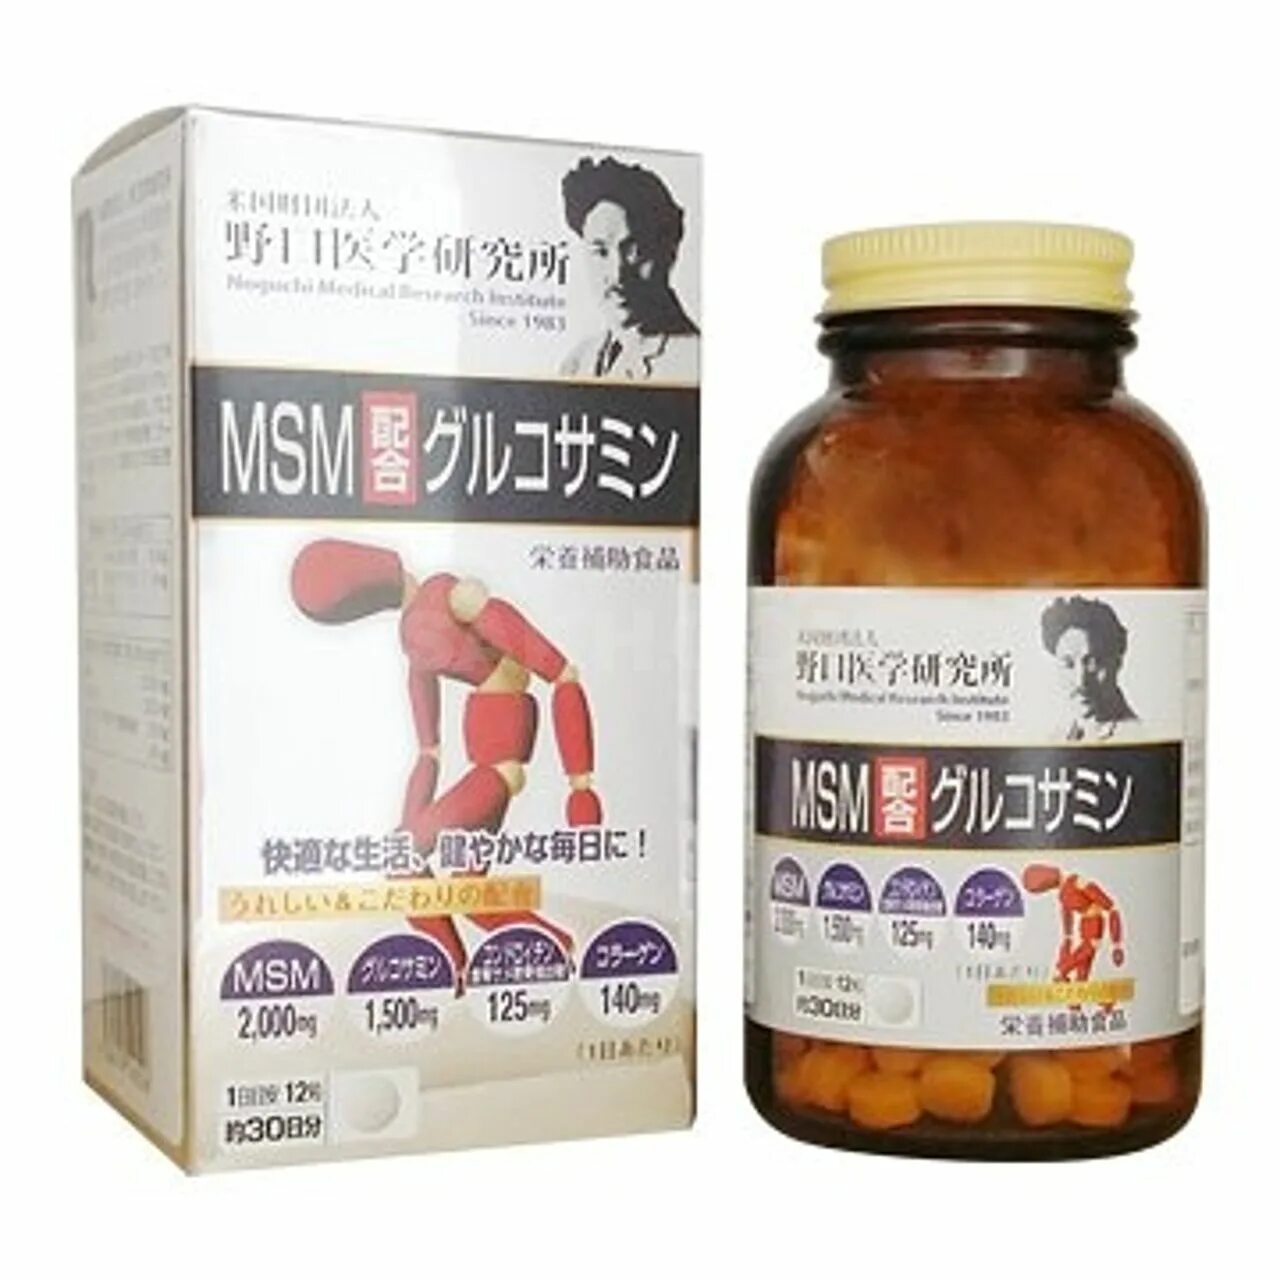 Noguchi глюкозамин + MSM (МСМ). Японский глюкозамин хондроитин MSM. Noguchi Glucosamine MSM, 360шт. Японский БАД для суставов MSM.